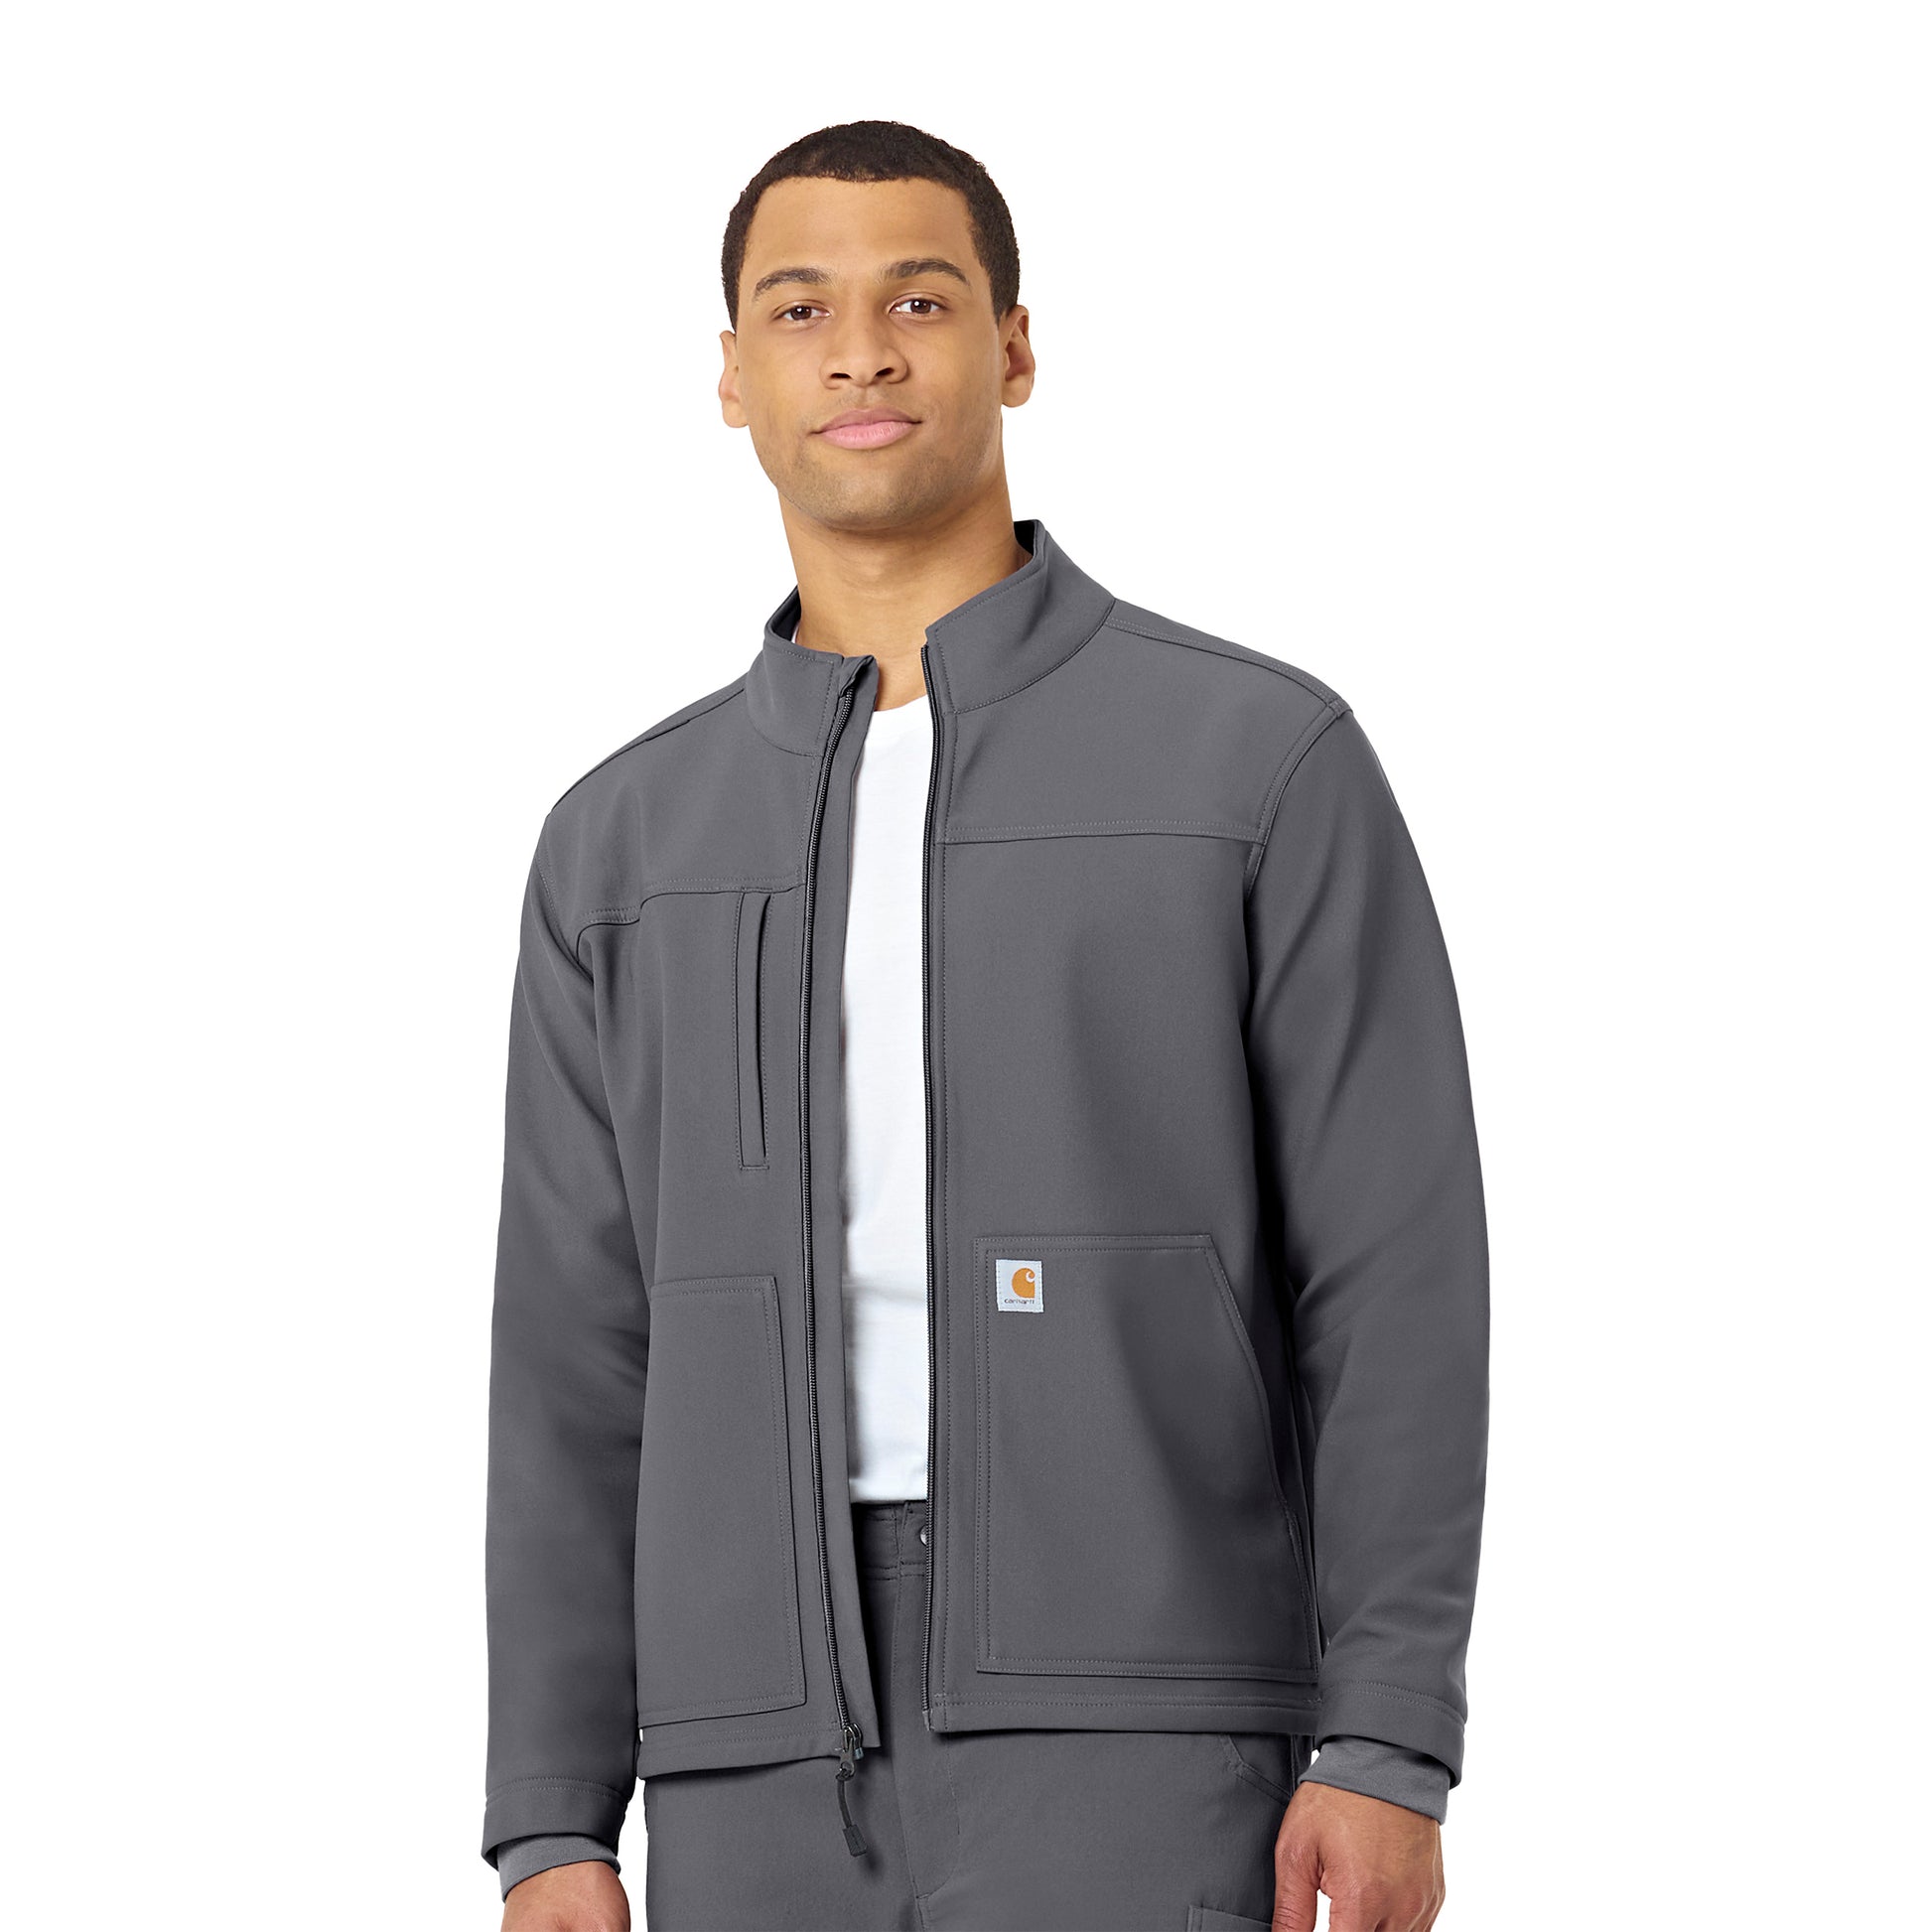 Carhartt C80023 Men's Rugged Flex Fleece Jacket Pewter Grey